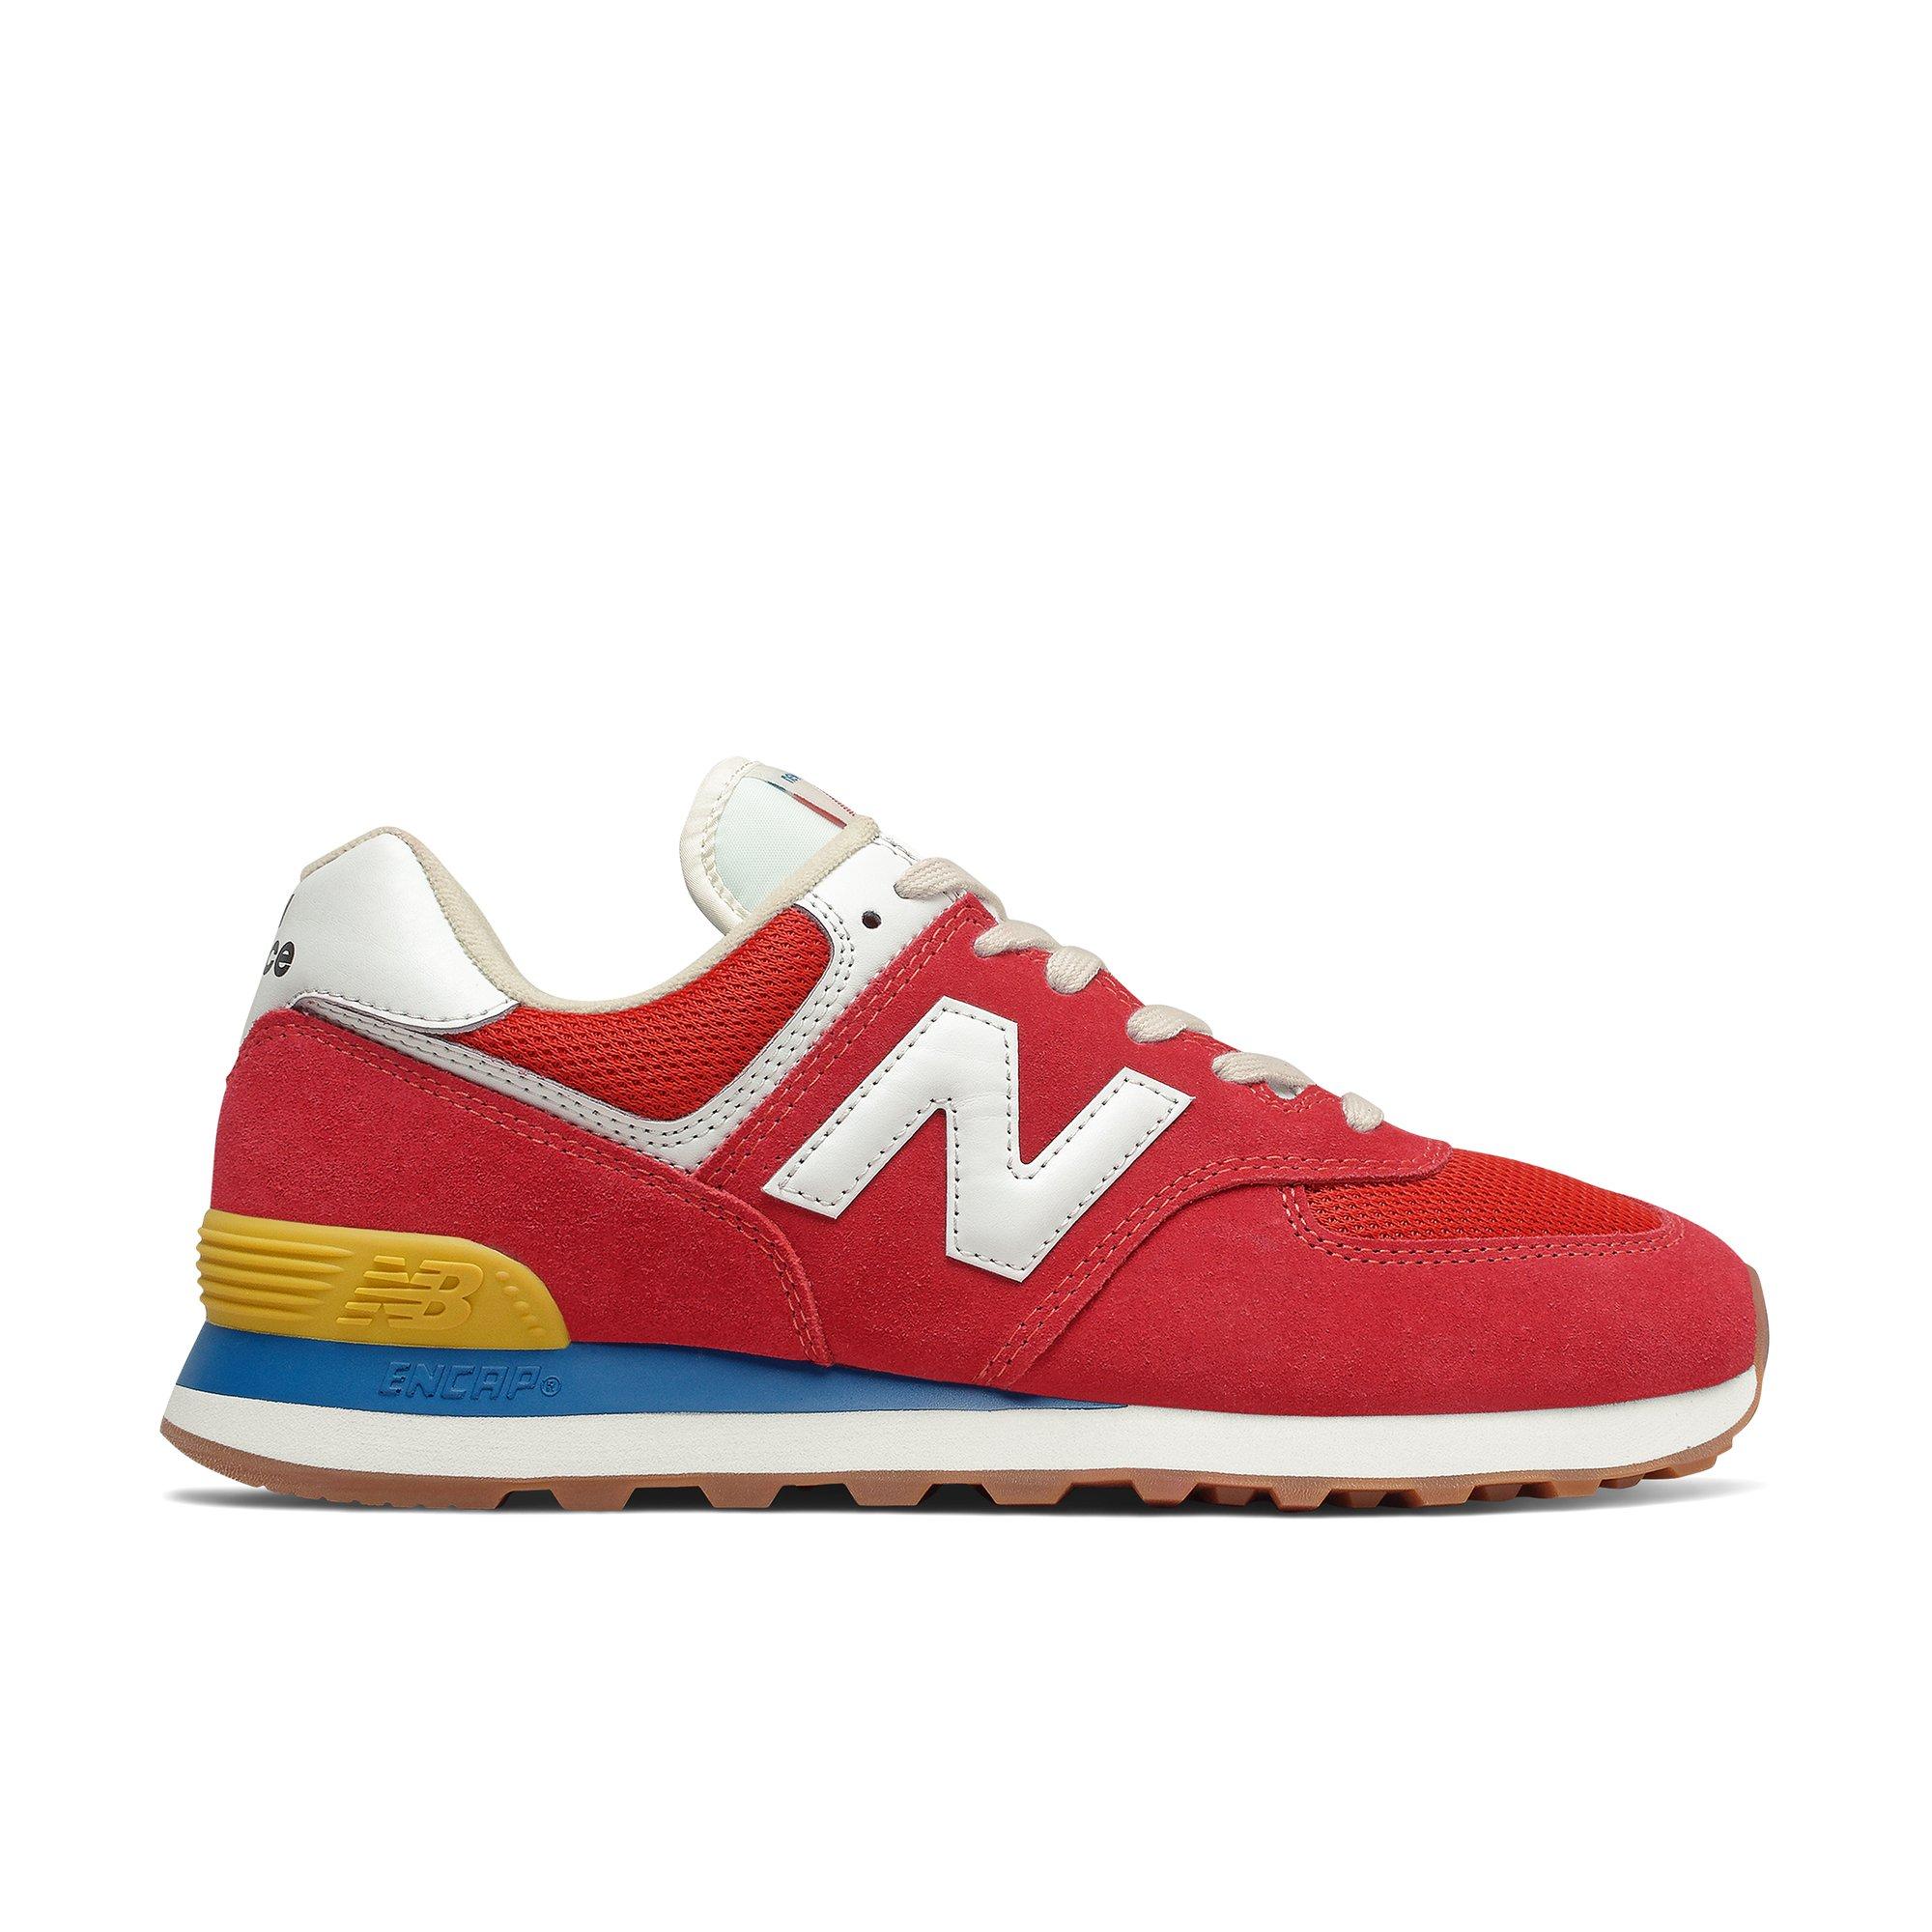 New Balance 574 "Red/White/Blue" Shoe